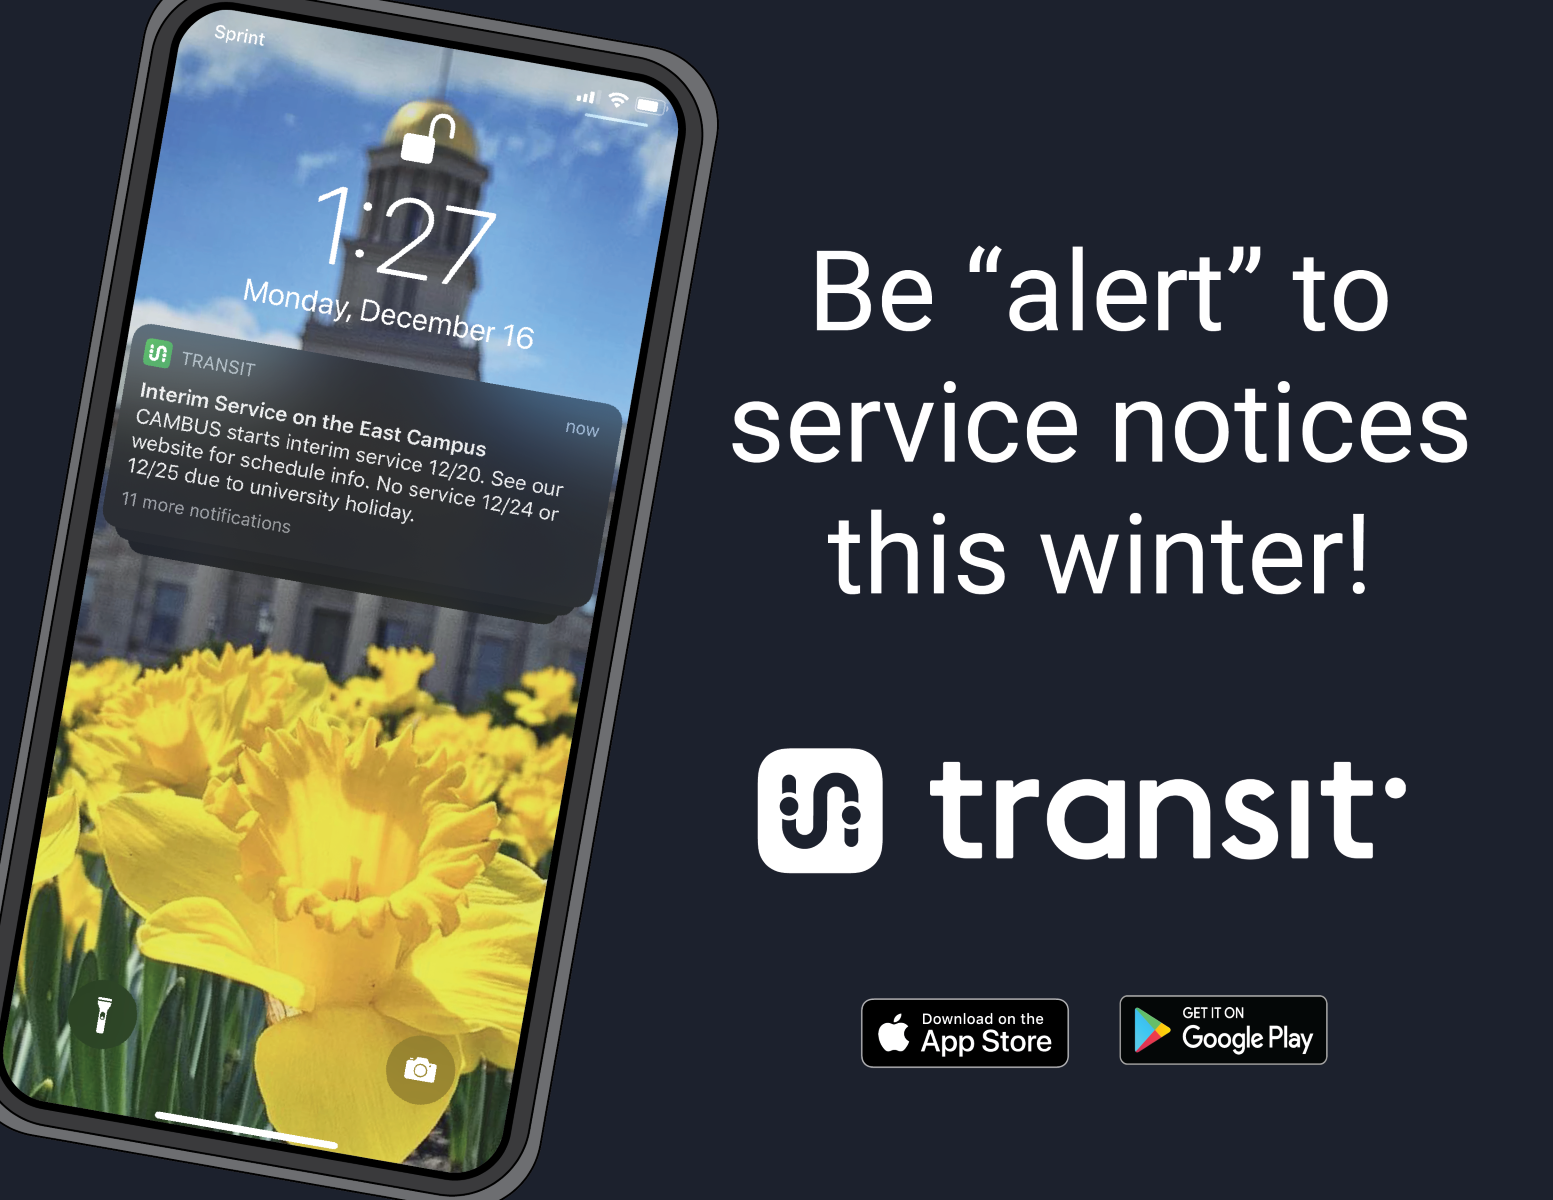 Transit app has service alerts